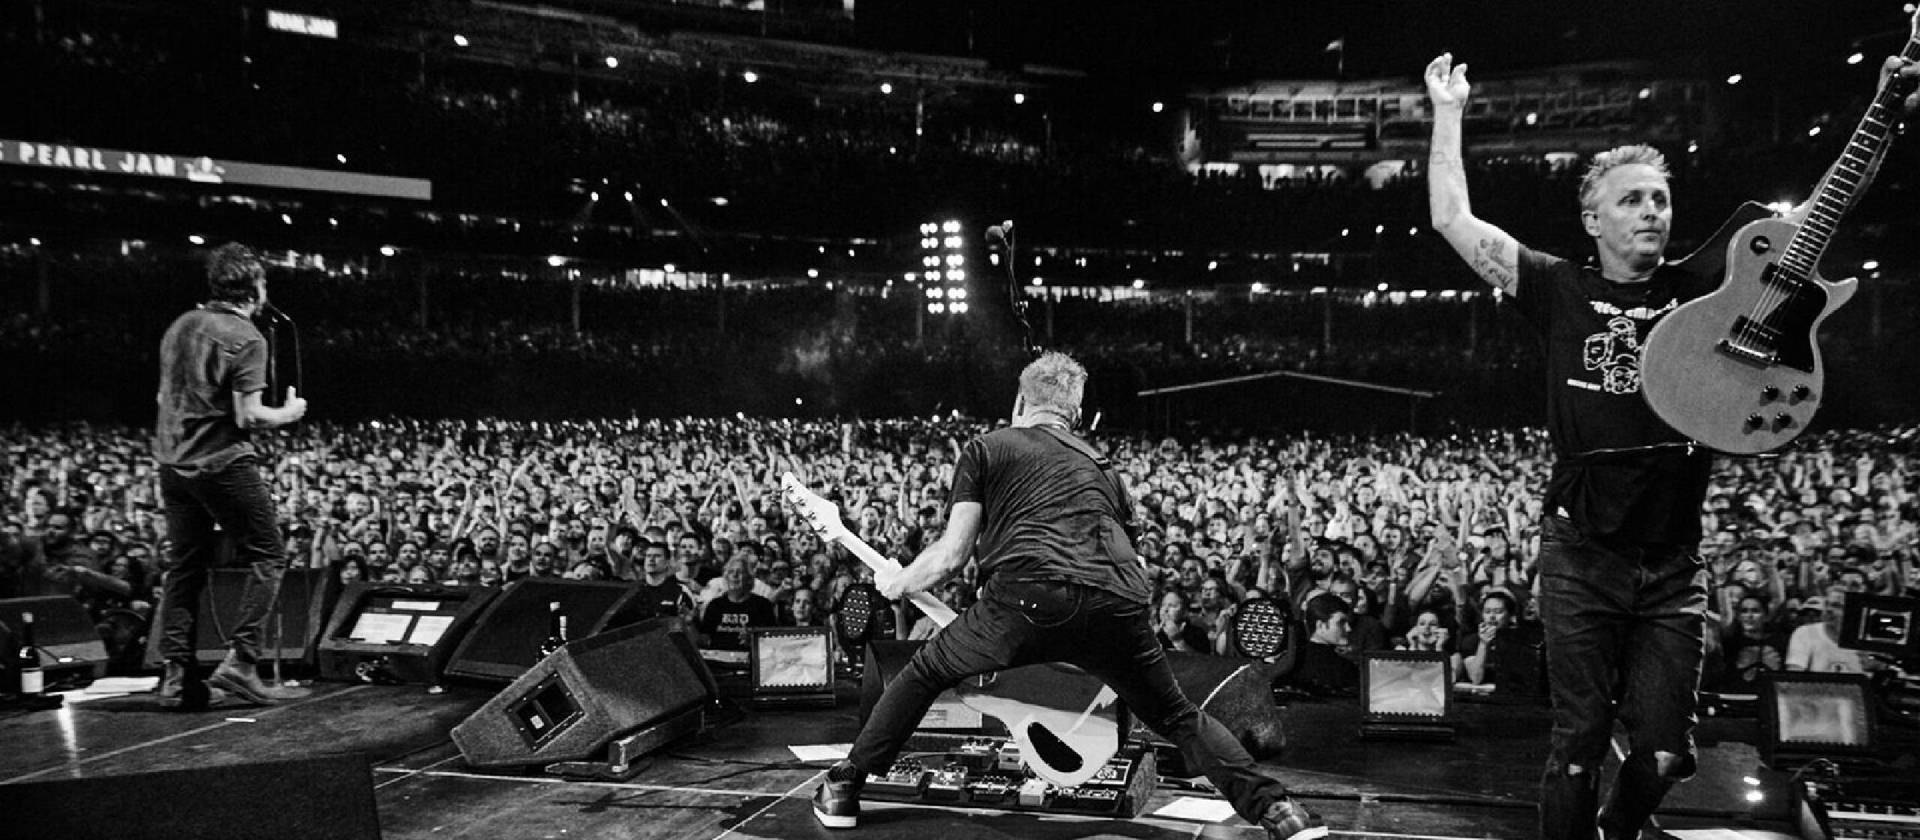 Pearl Jam Rock Band Live Concert